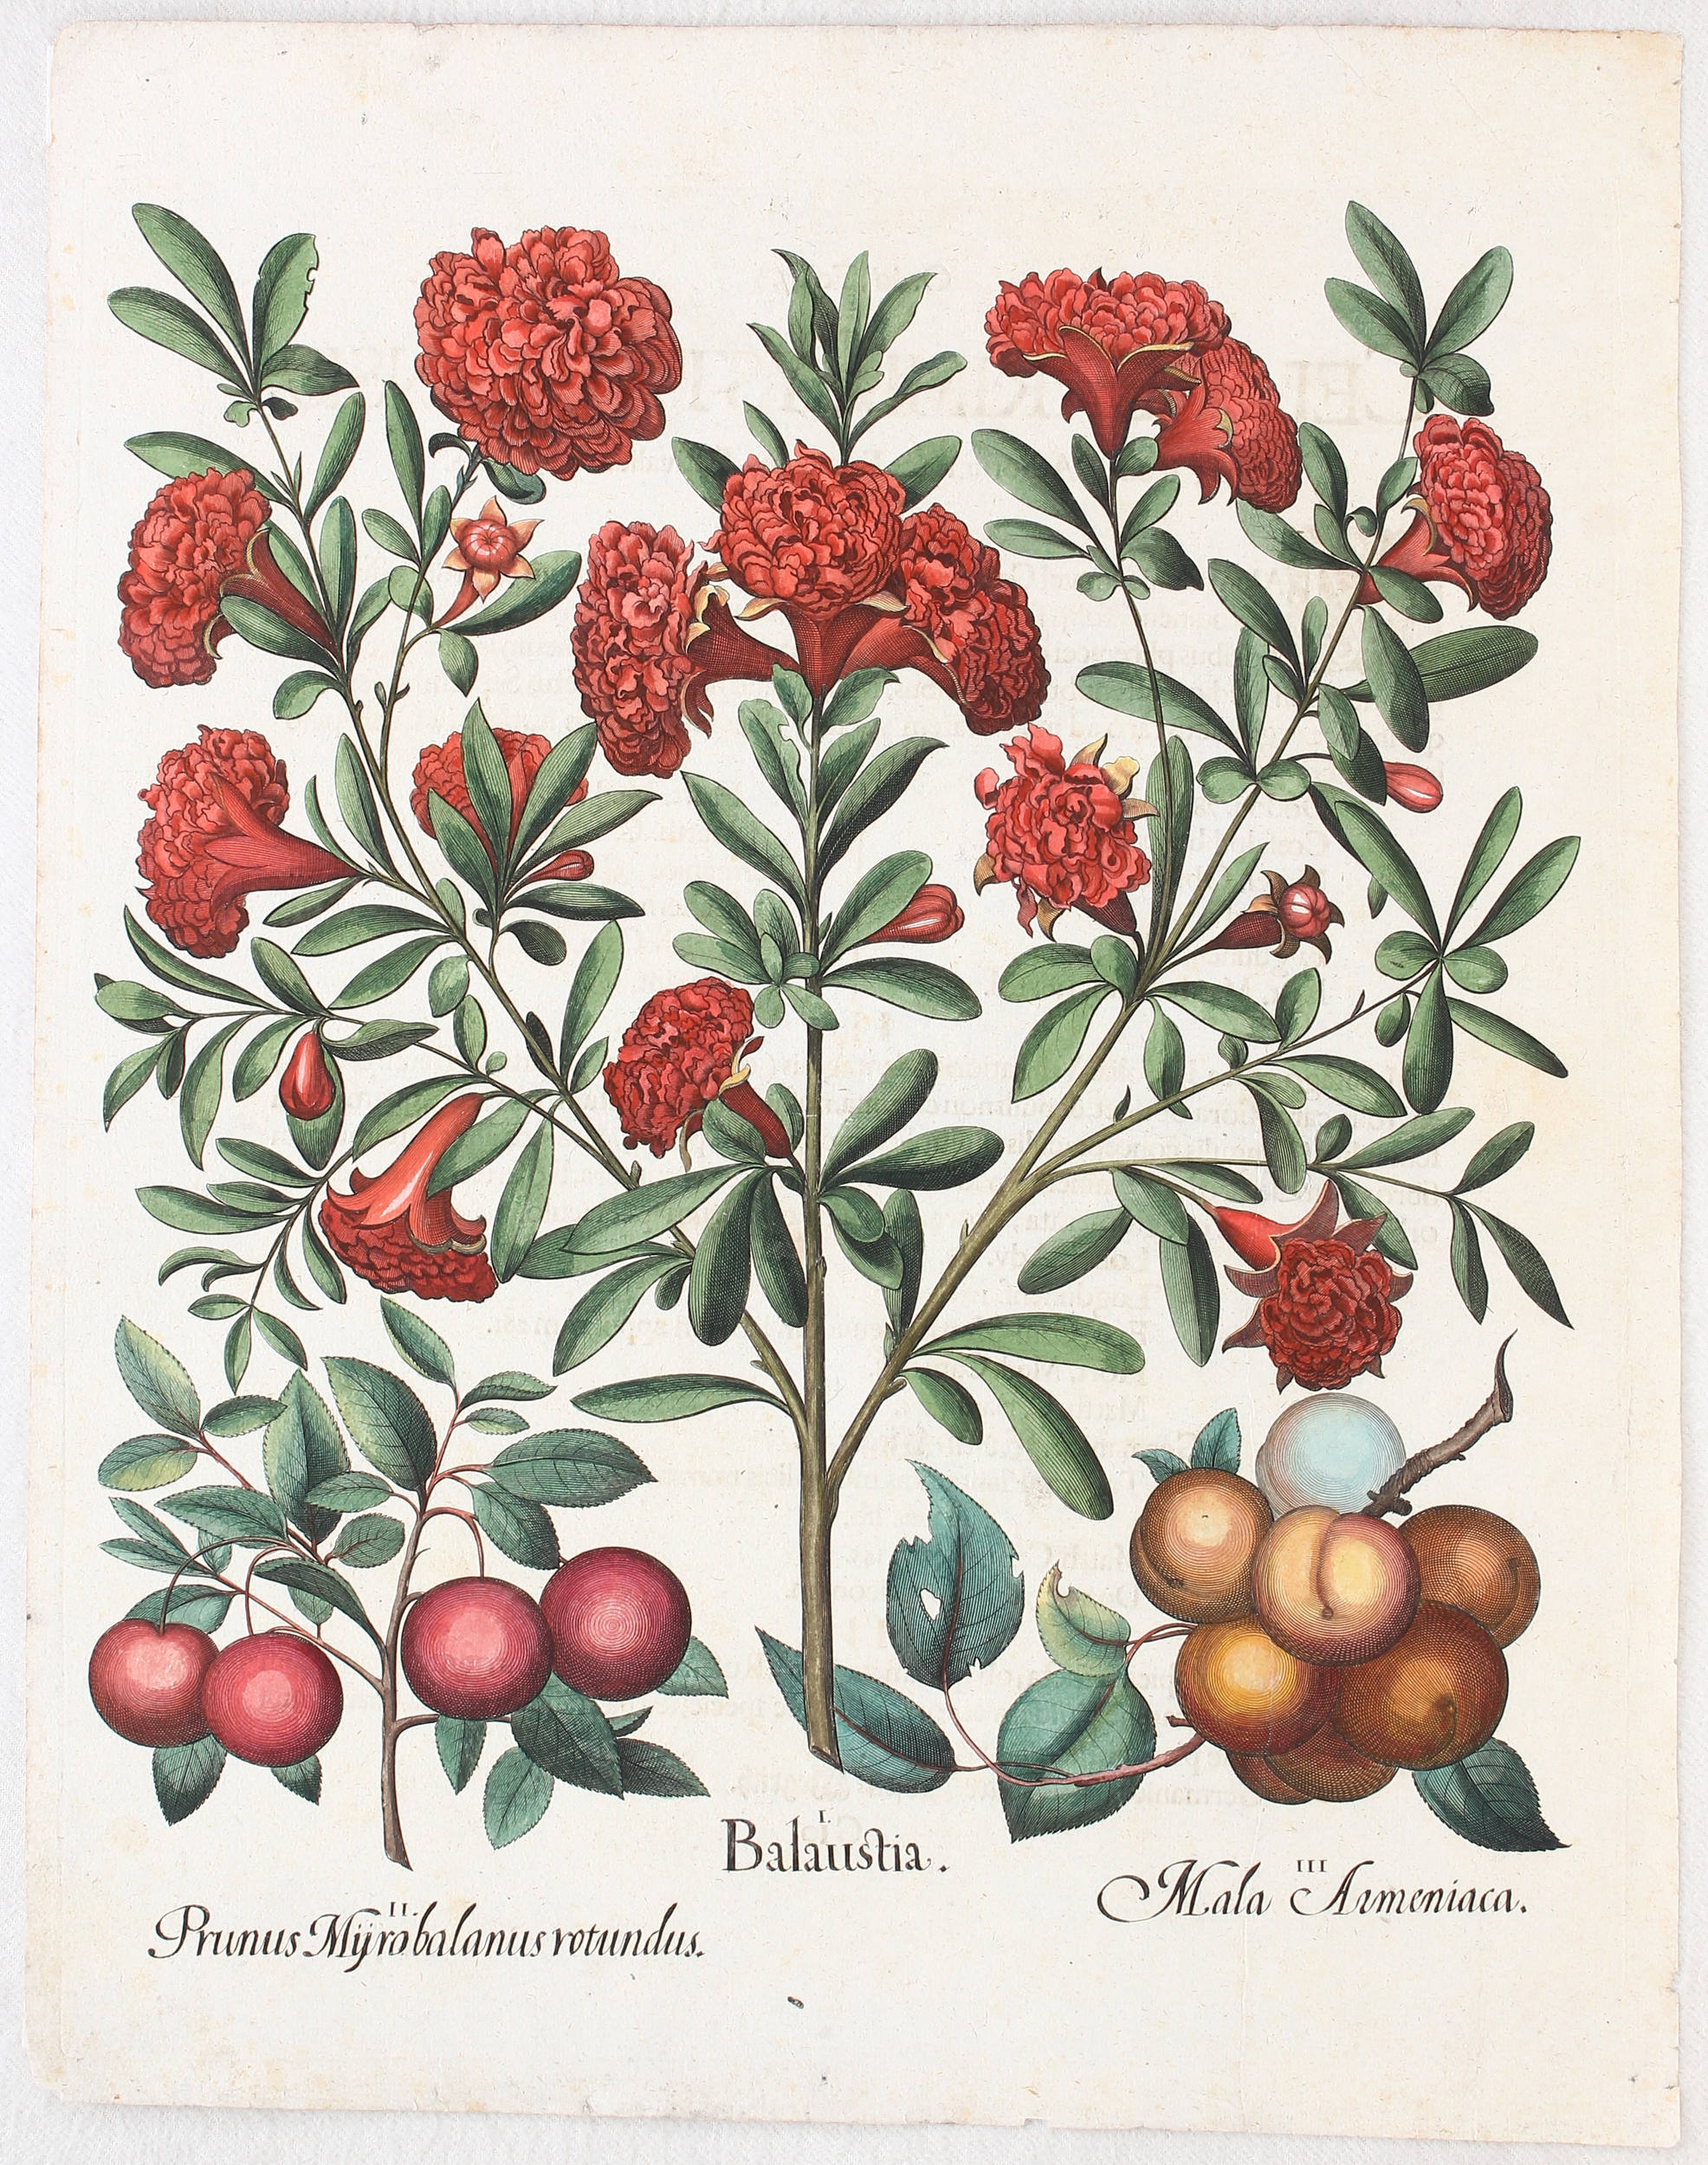 Balaustia, Prunus Myrobalanus rotundus, Mala Armeniaca (blühender Granatapfelbaum mit Früchten, Kirschpflaume, Aprikose bzw. Marille) by Basilius Besler